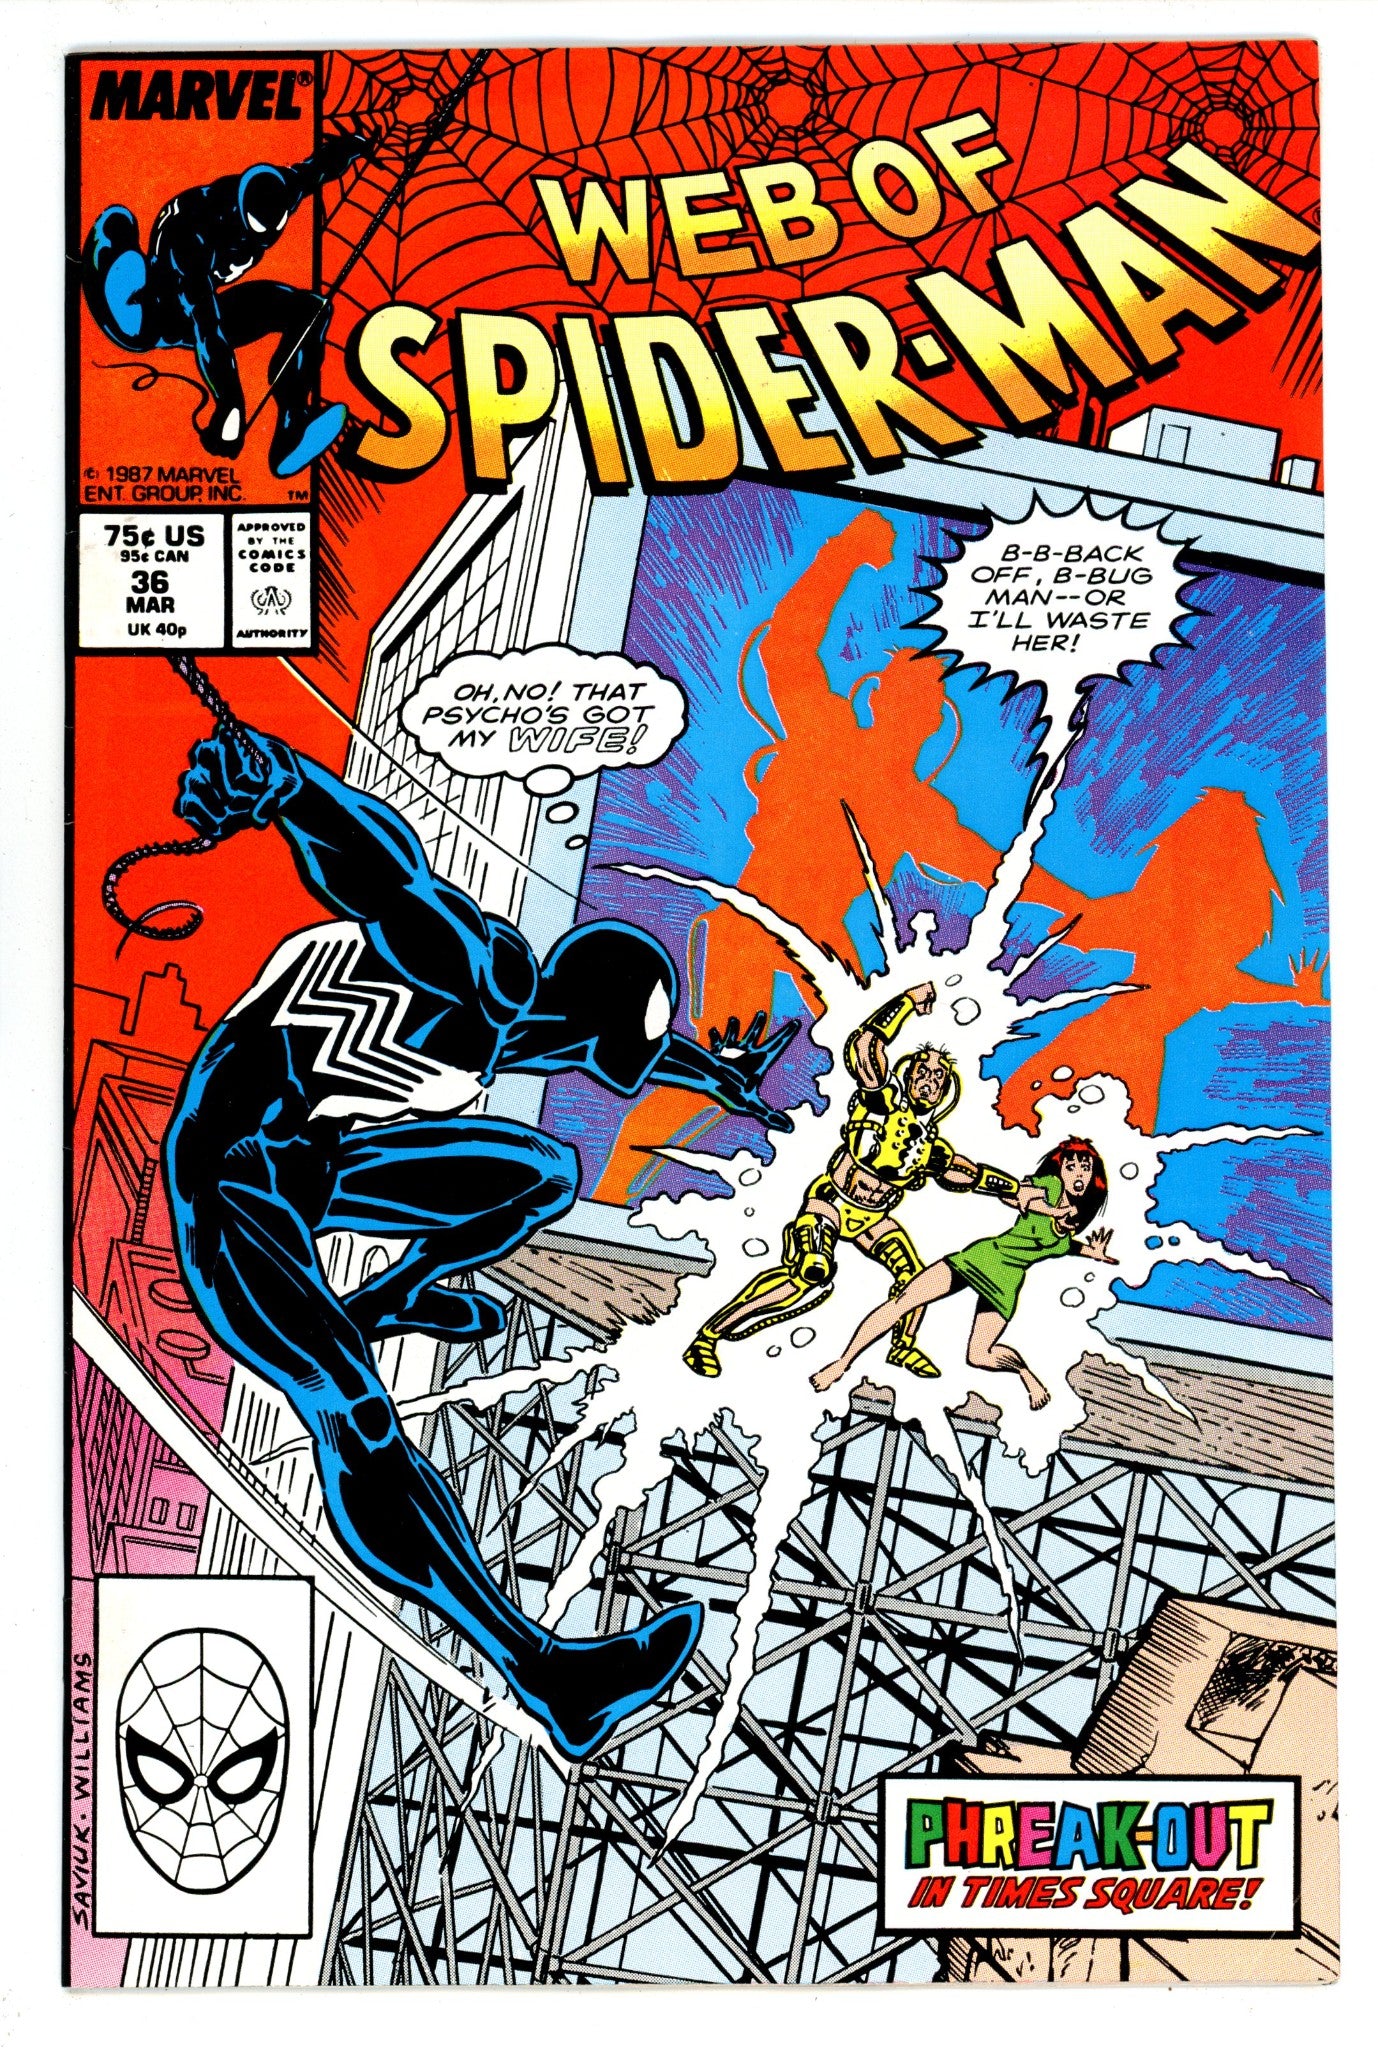 Web of Spider-Man Vol 1 36 FN/VF (7.0) (1988) 